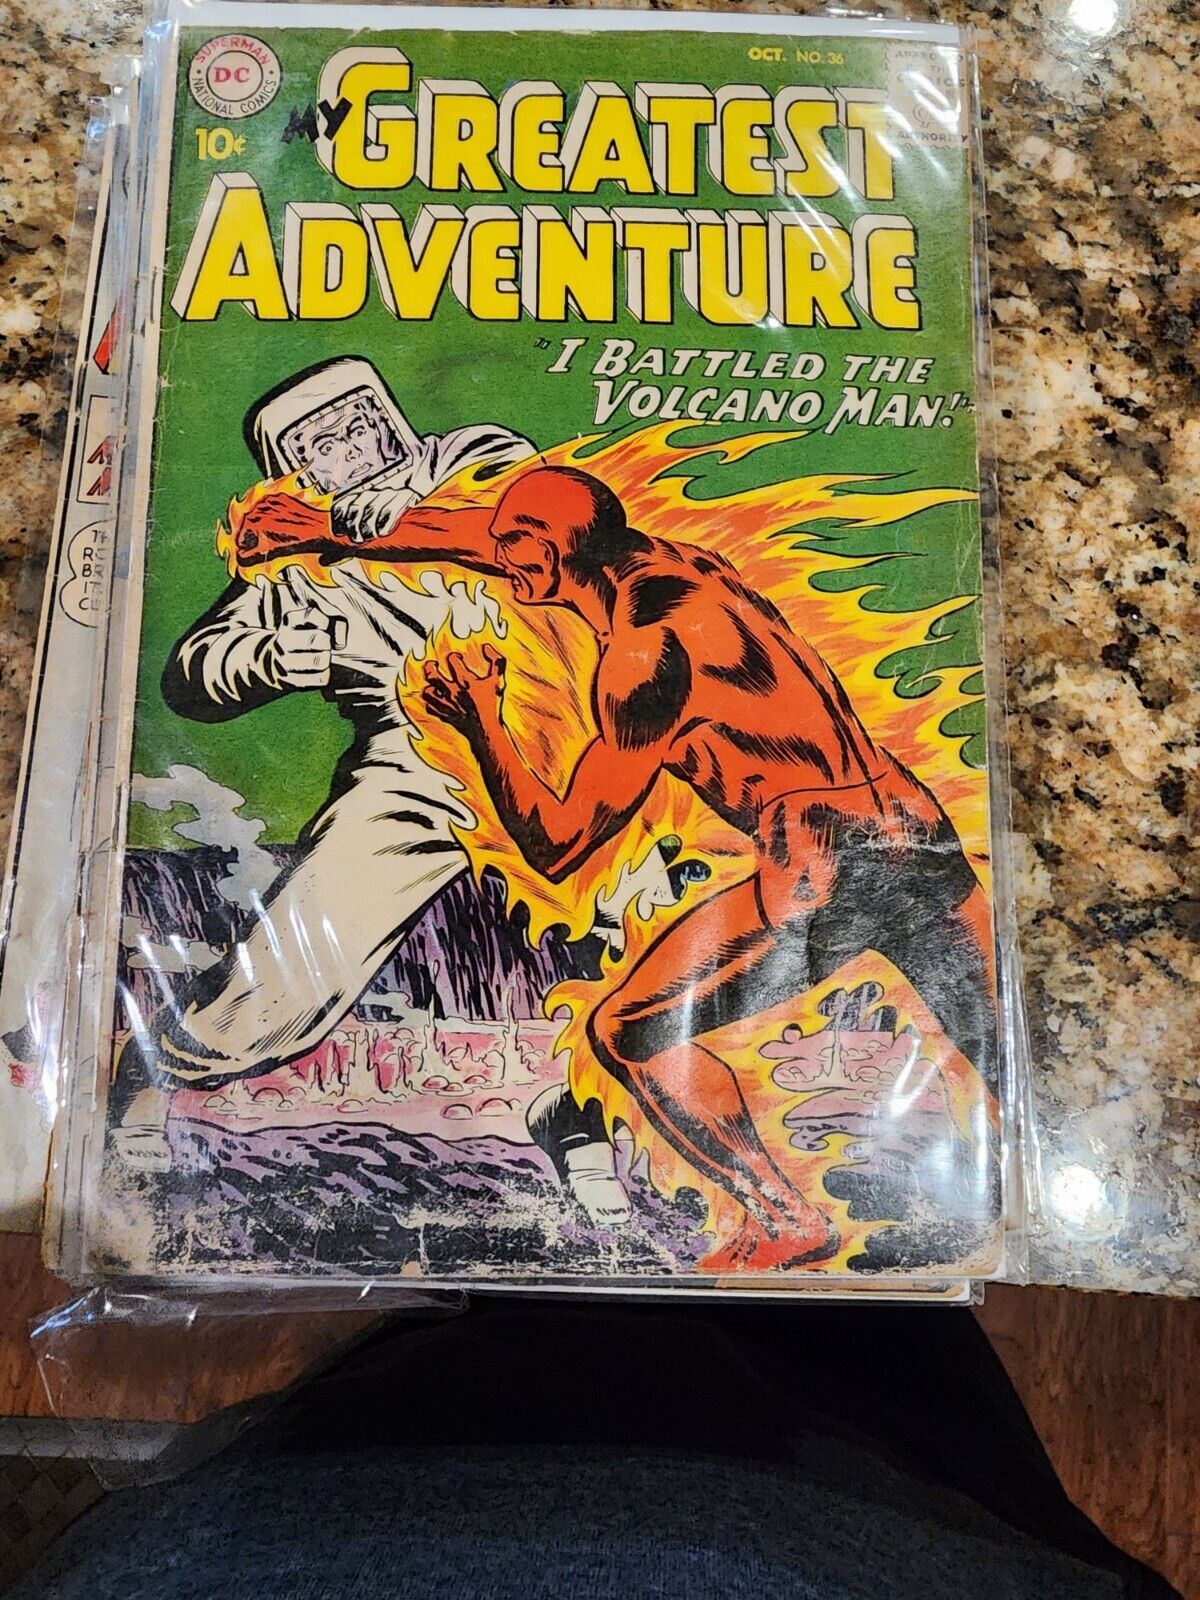 My Greatest Adventure #36 1959 DC Comics Volcano Man 10¢ nice copy Silver age